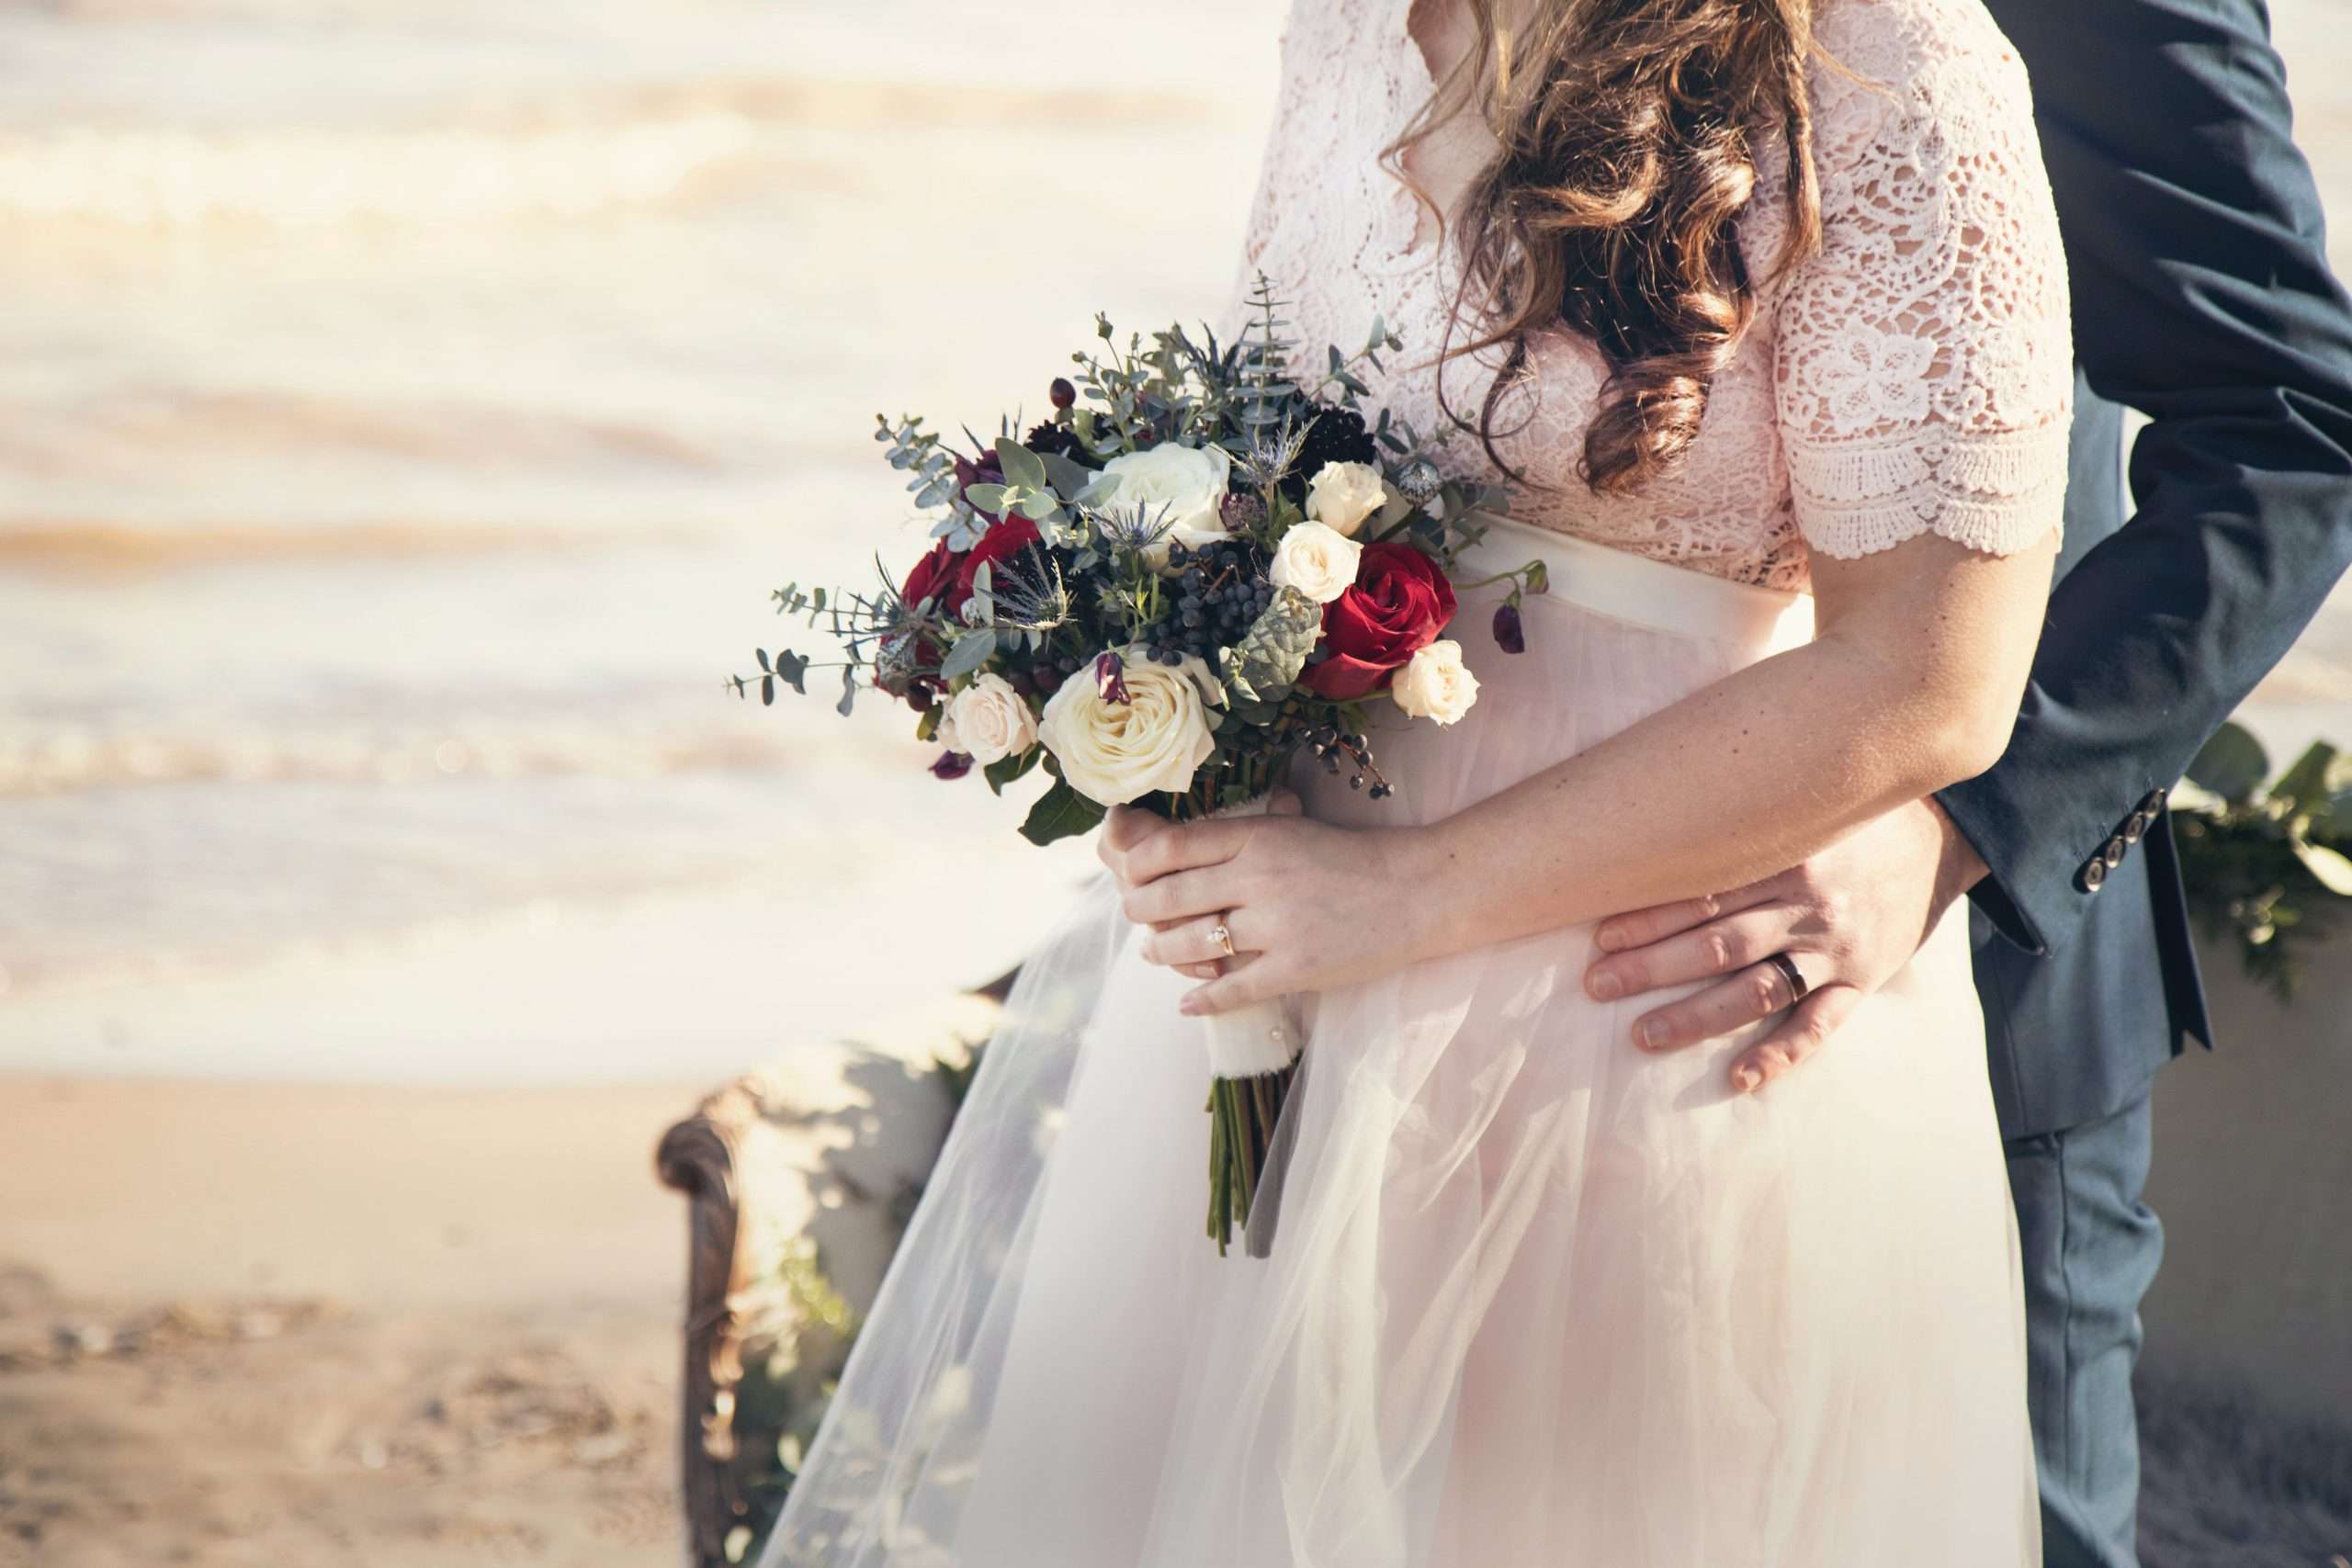 Top 10 tips for beautiful beach wedding dresses